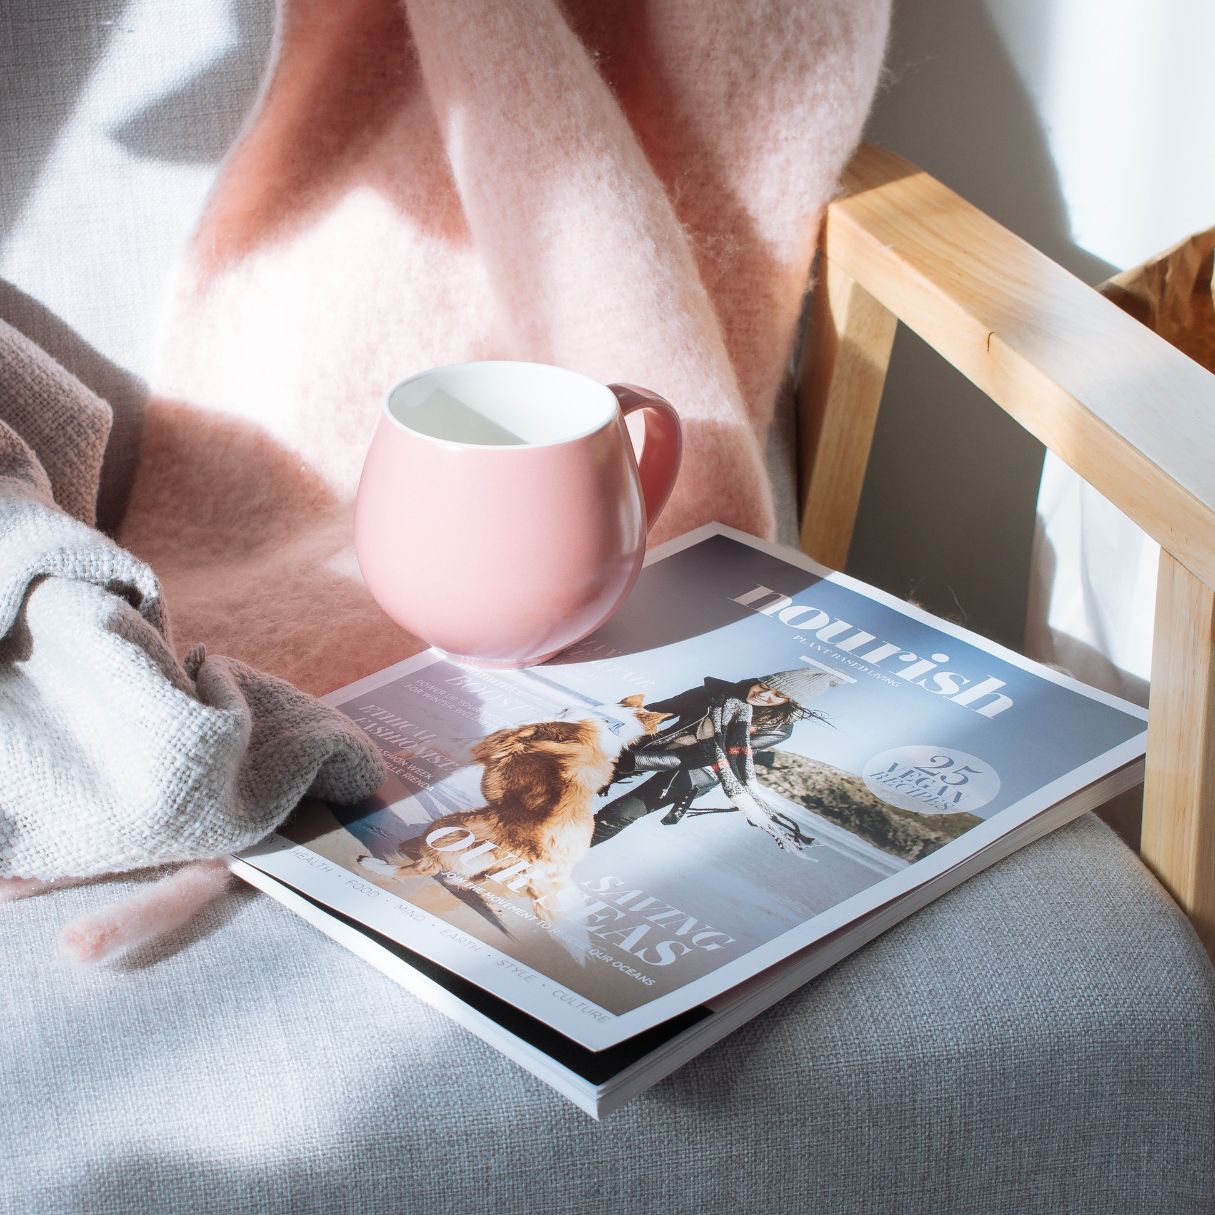 Cozy scene with coffee and nourish magazine